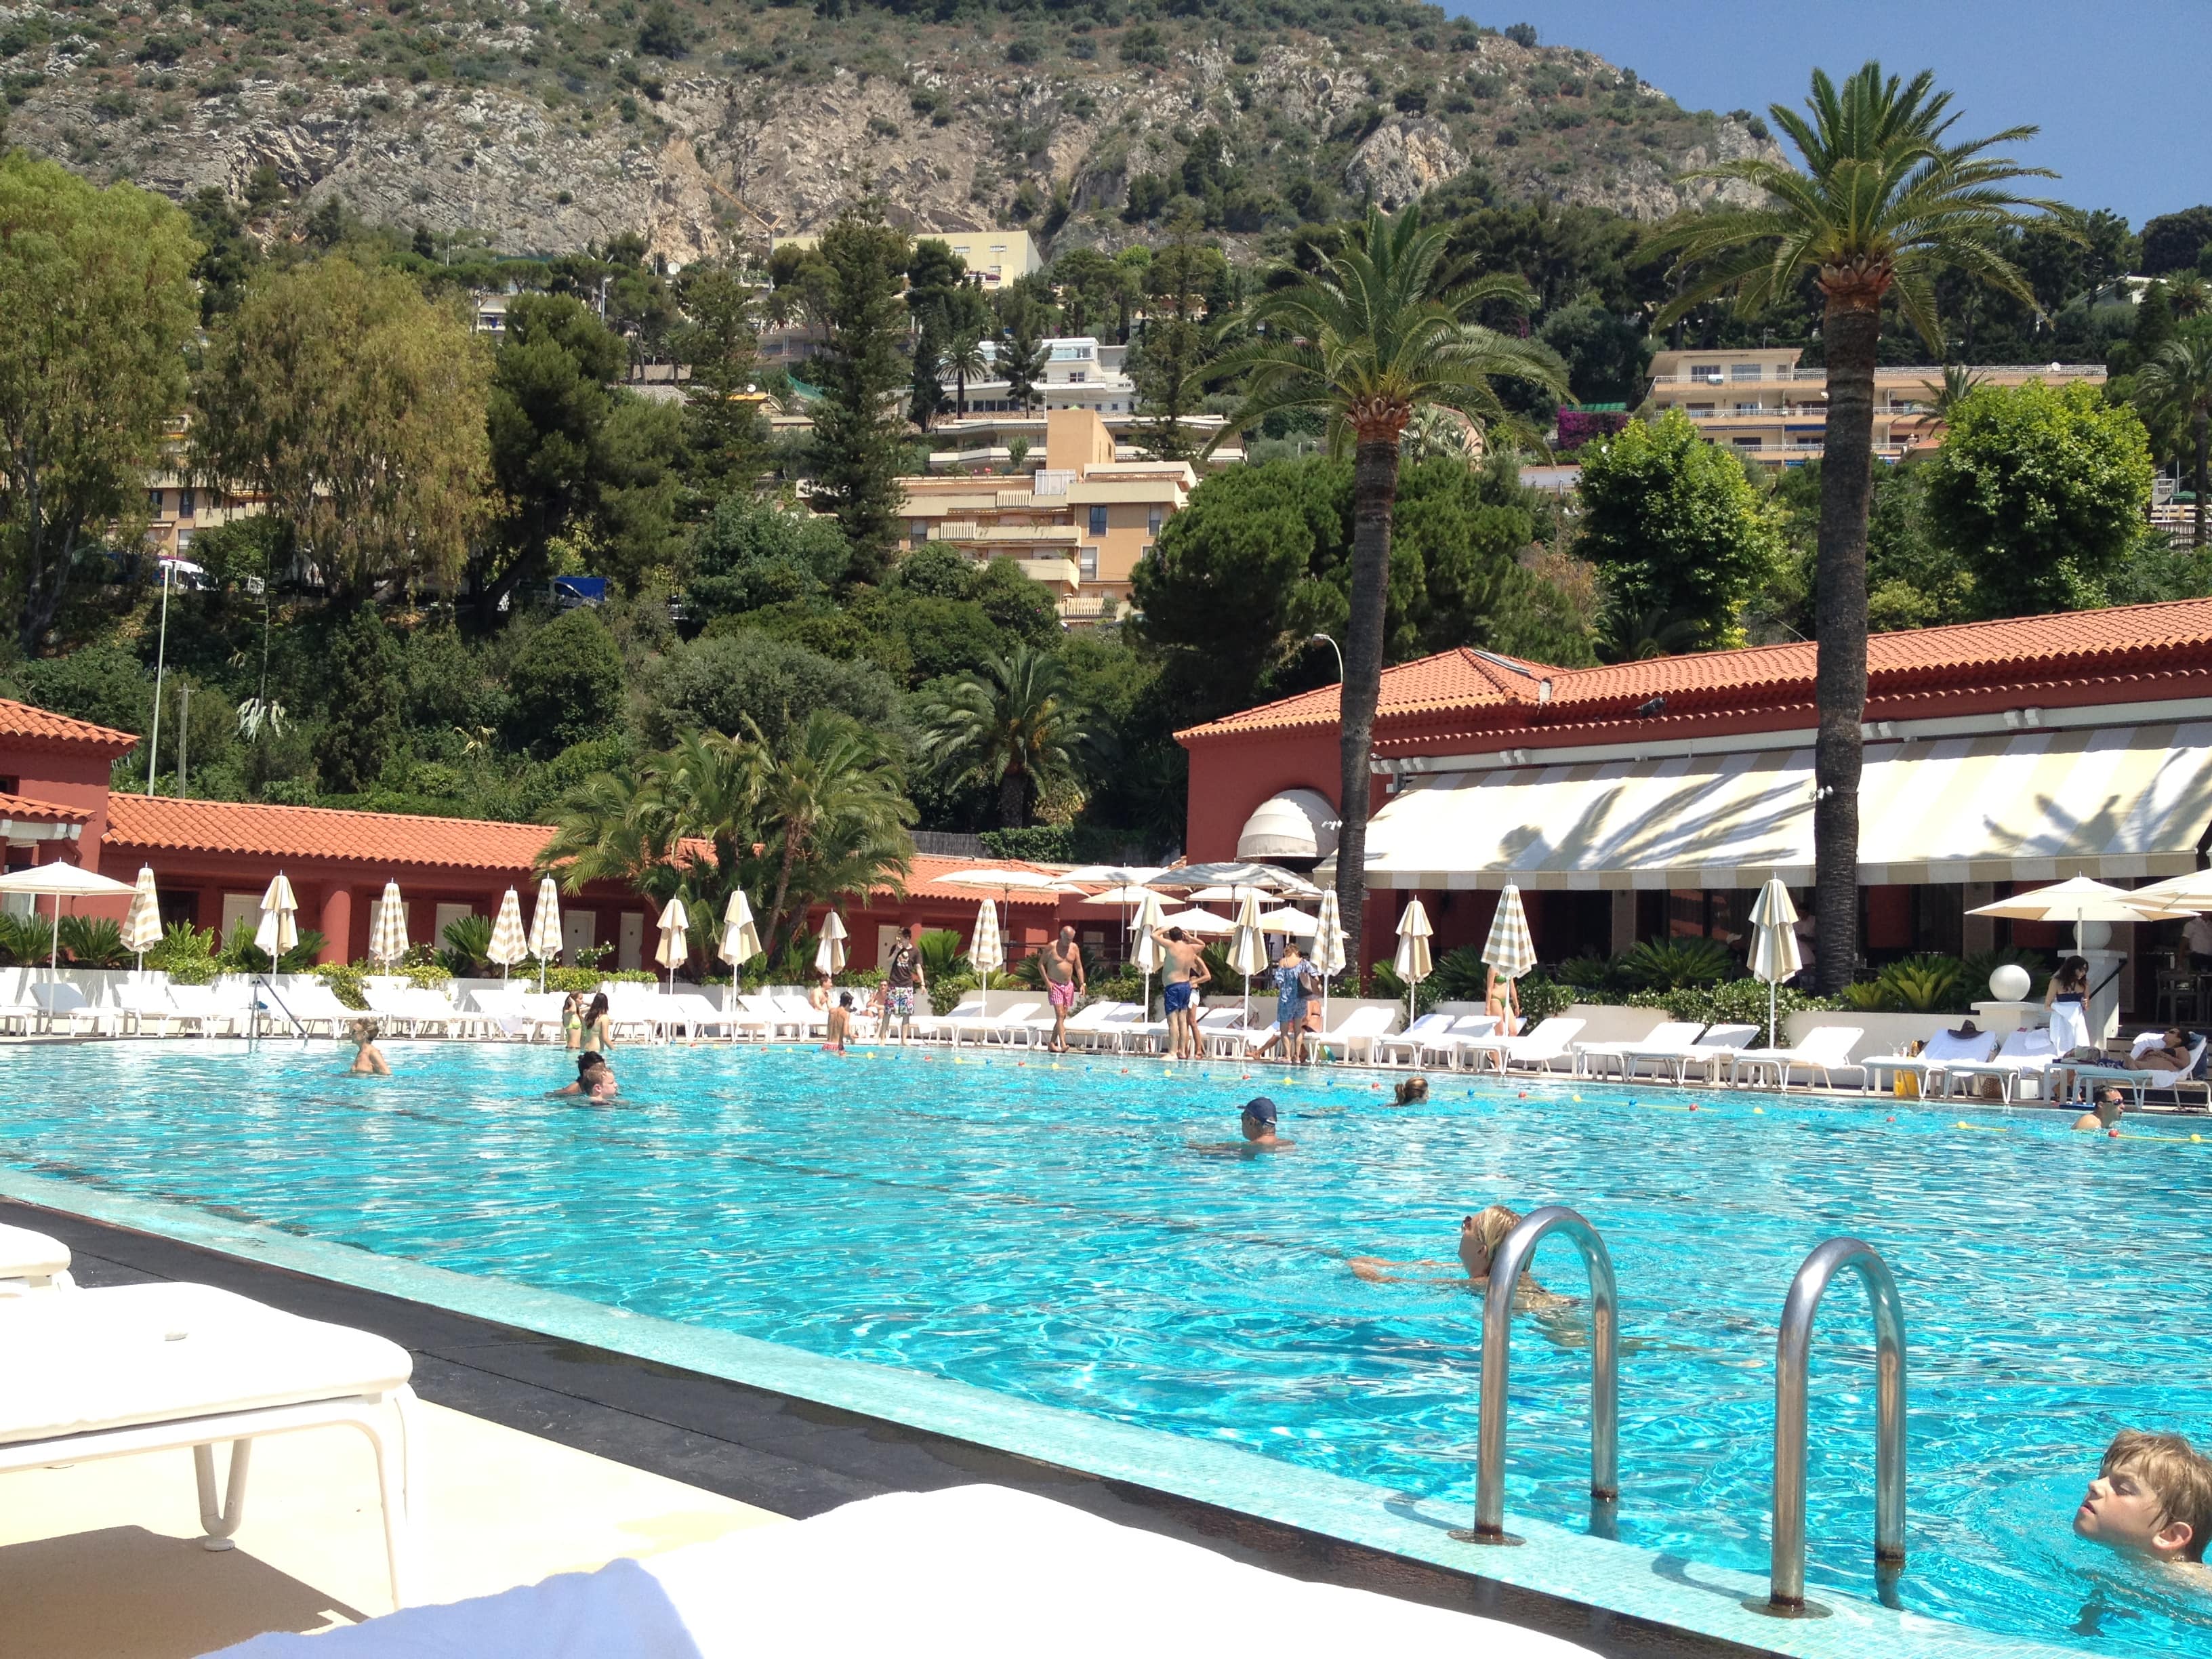 Monte Carlo Beach Hotel Monaco - Avalon Events Organisation